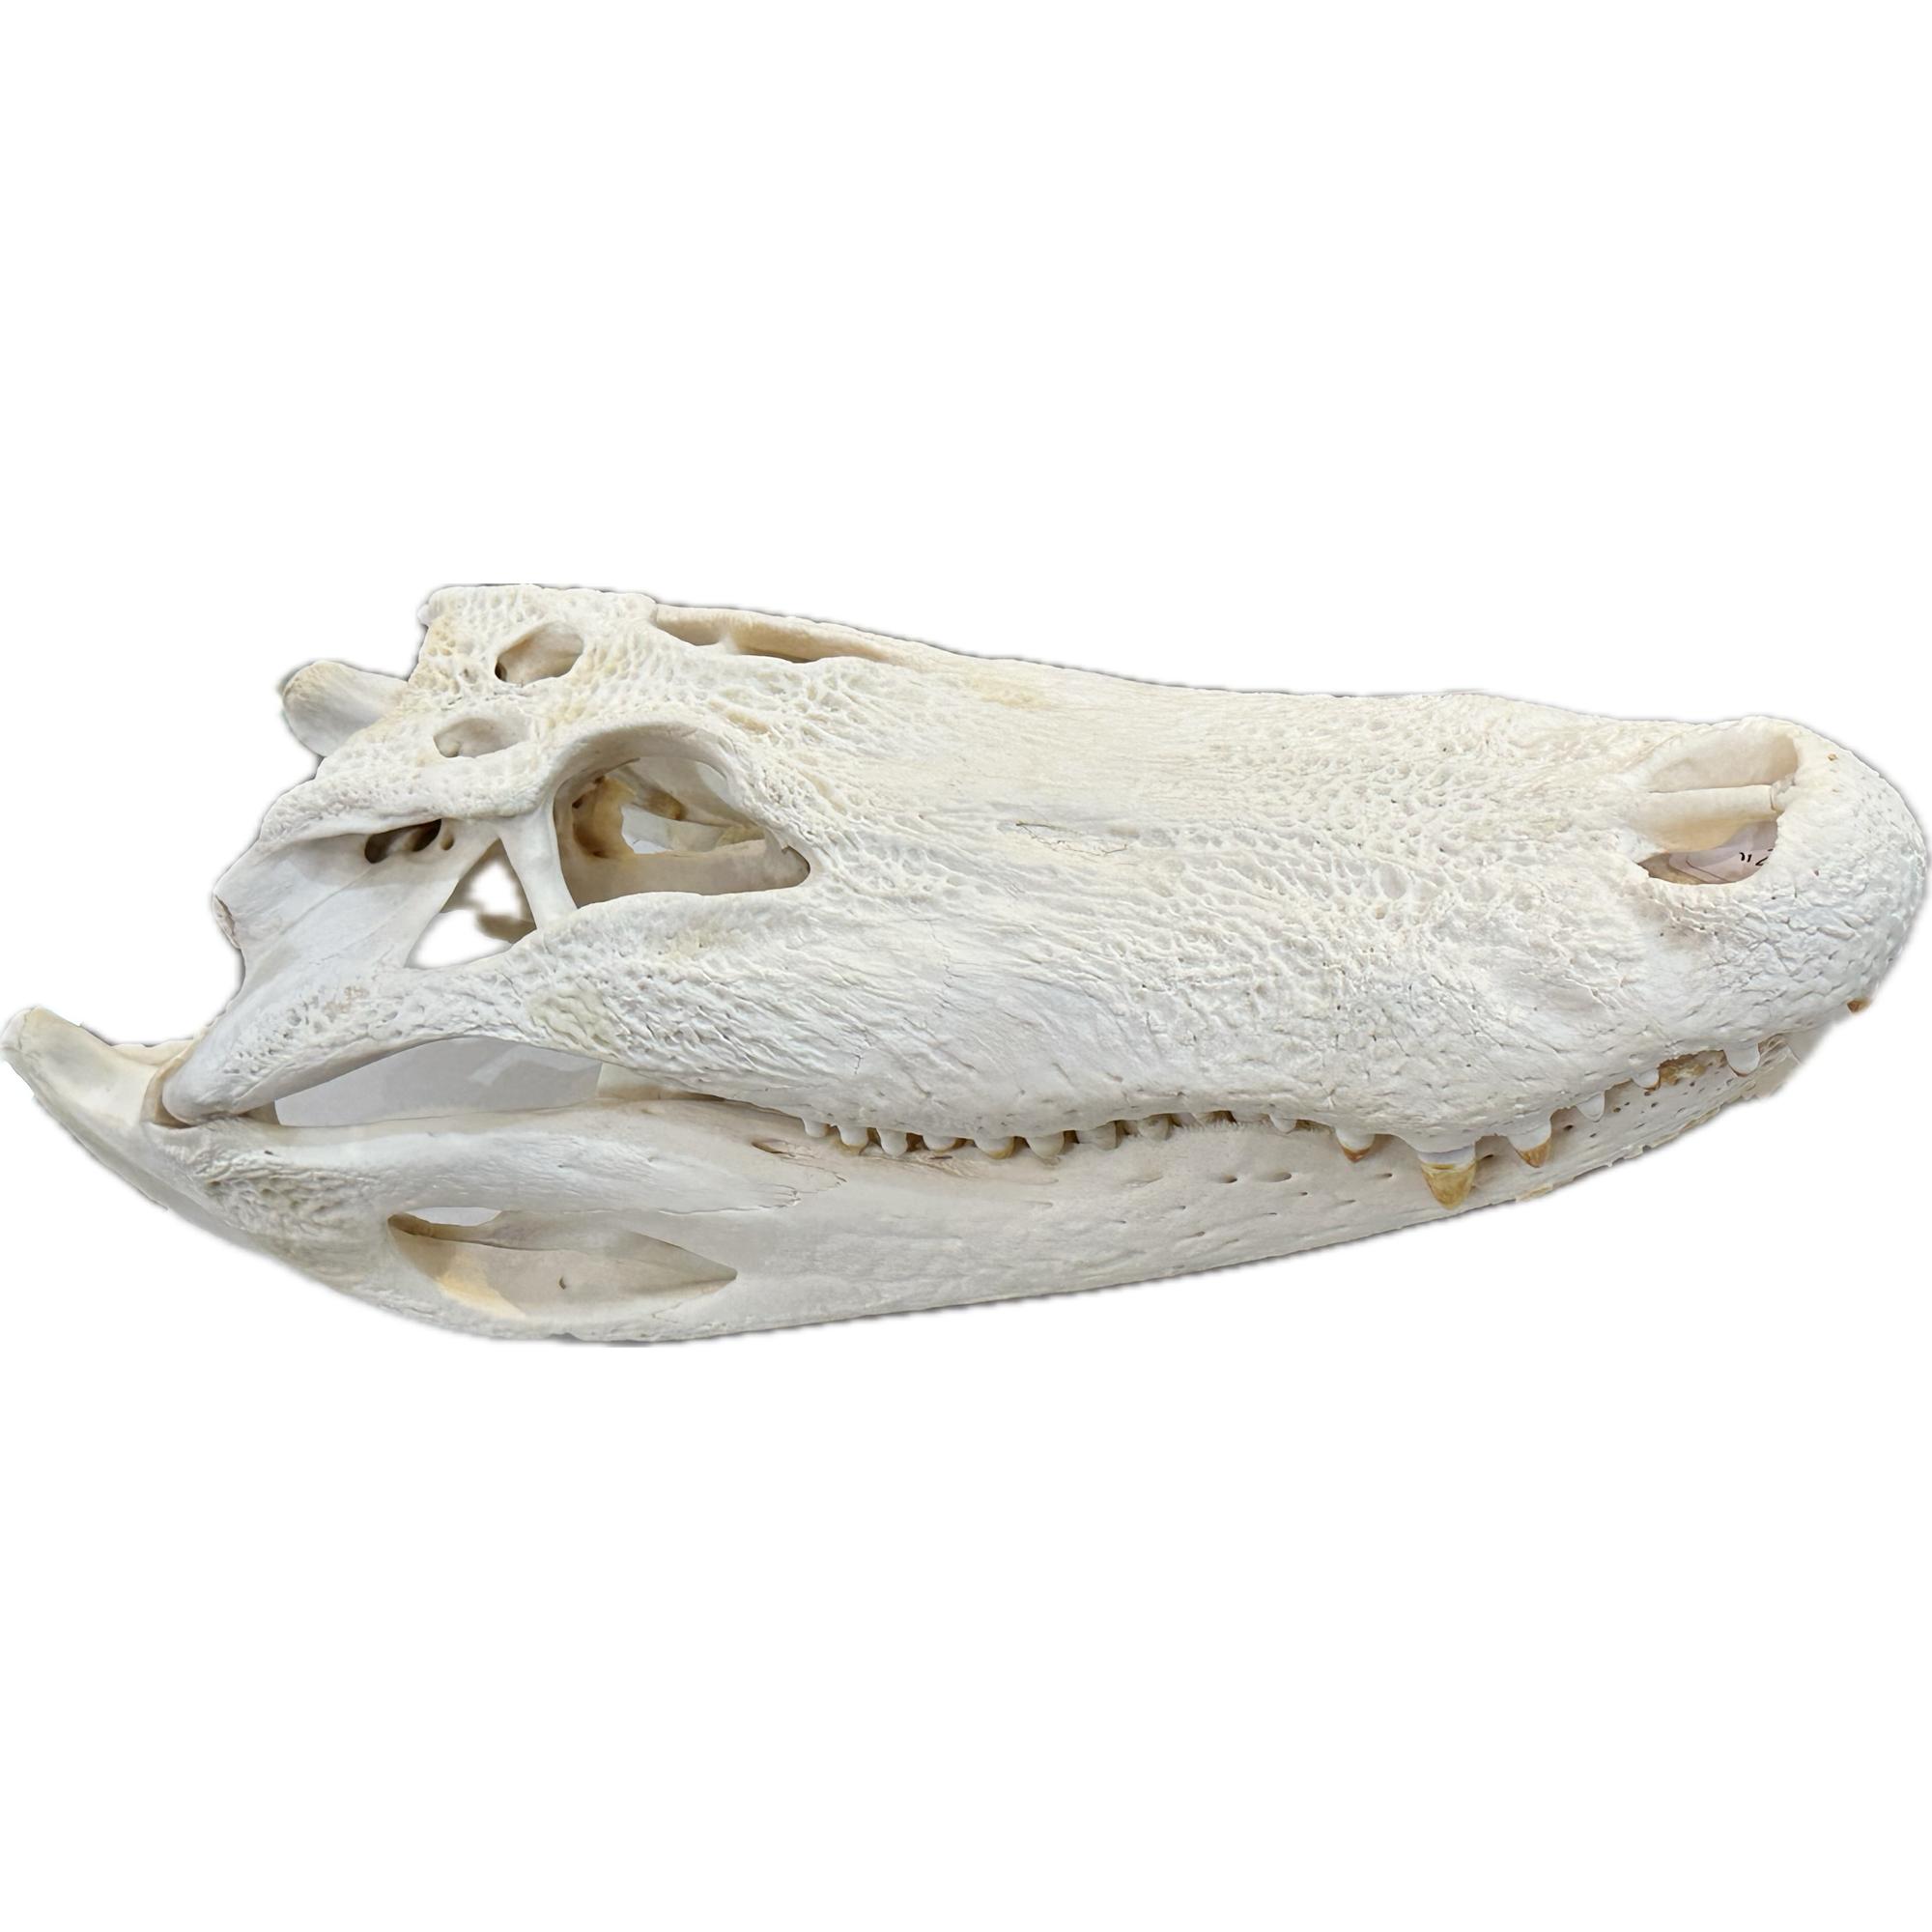 Alligator skull, Monster 22 inch taxidermy Prehistoric Online